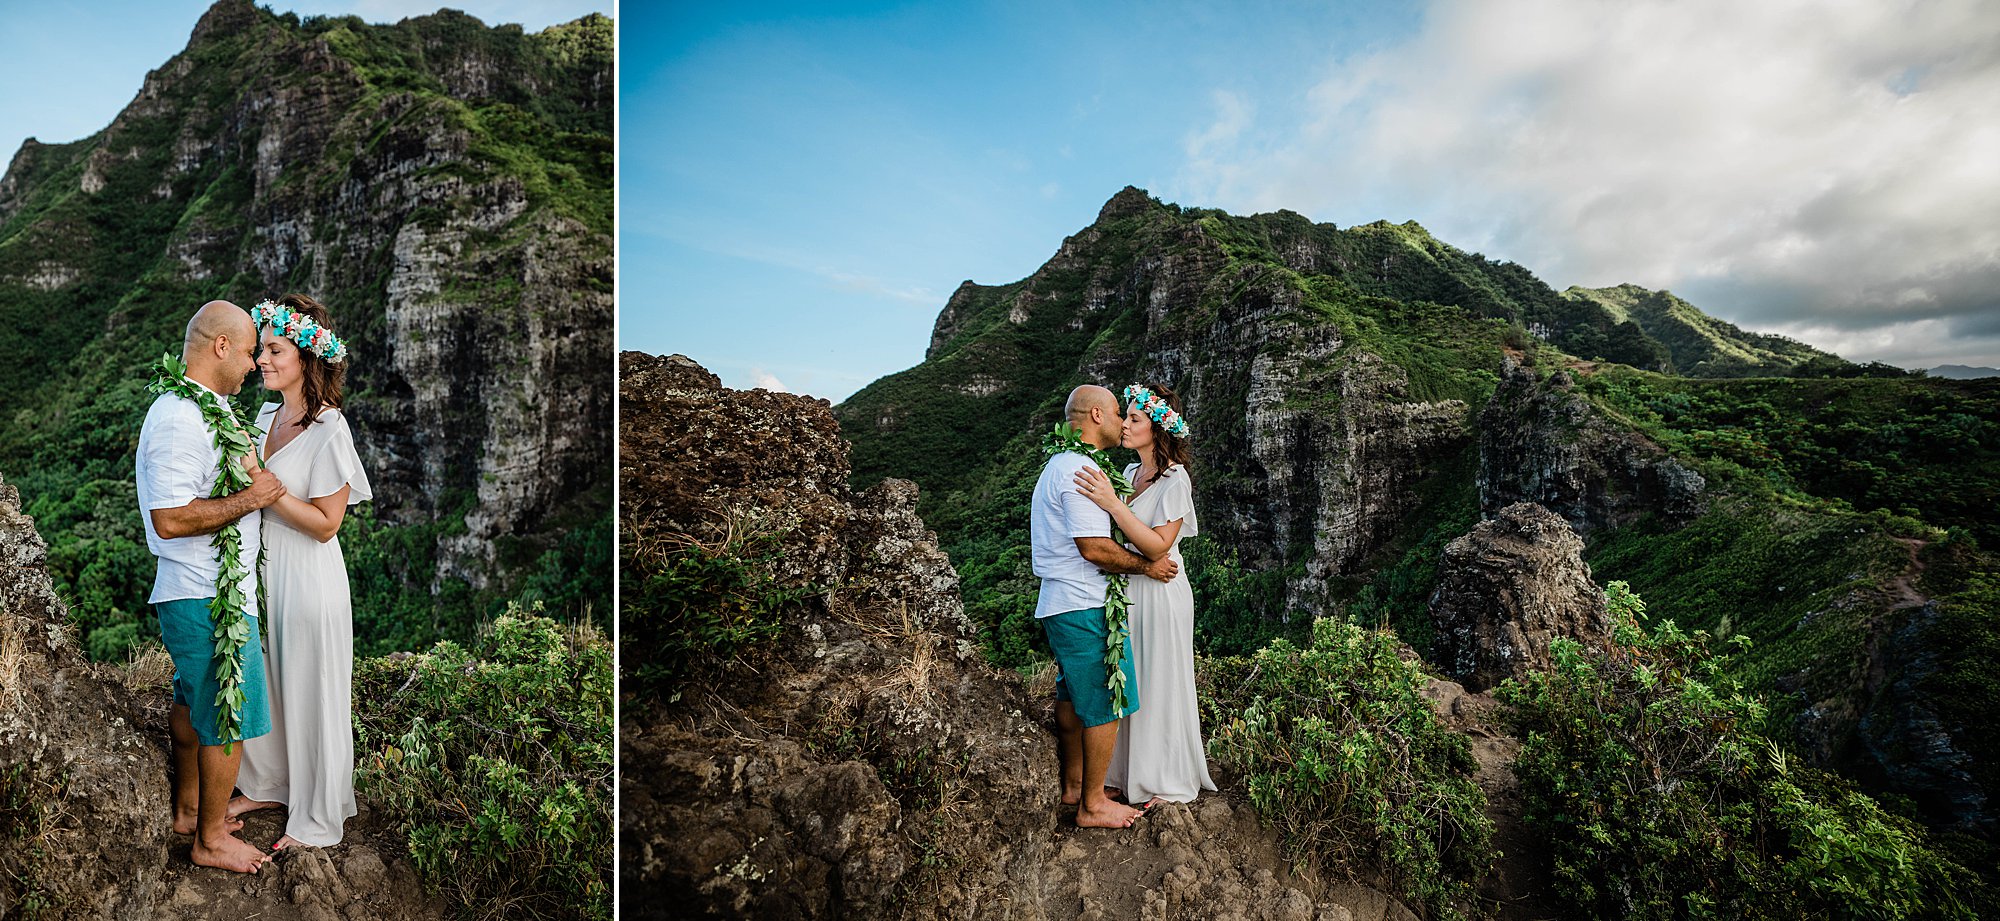 couple eloping in hawaii